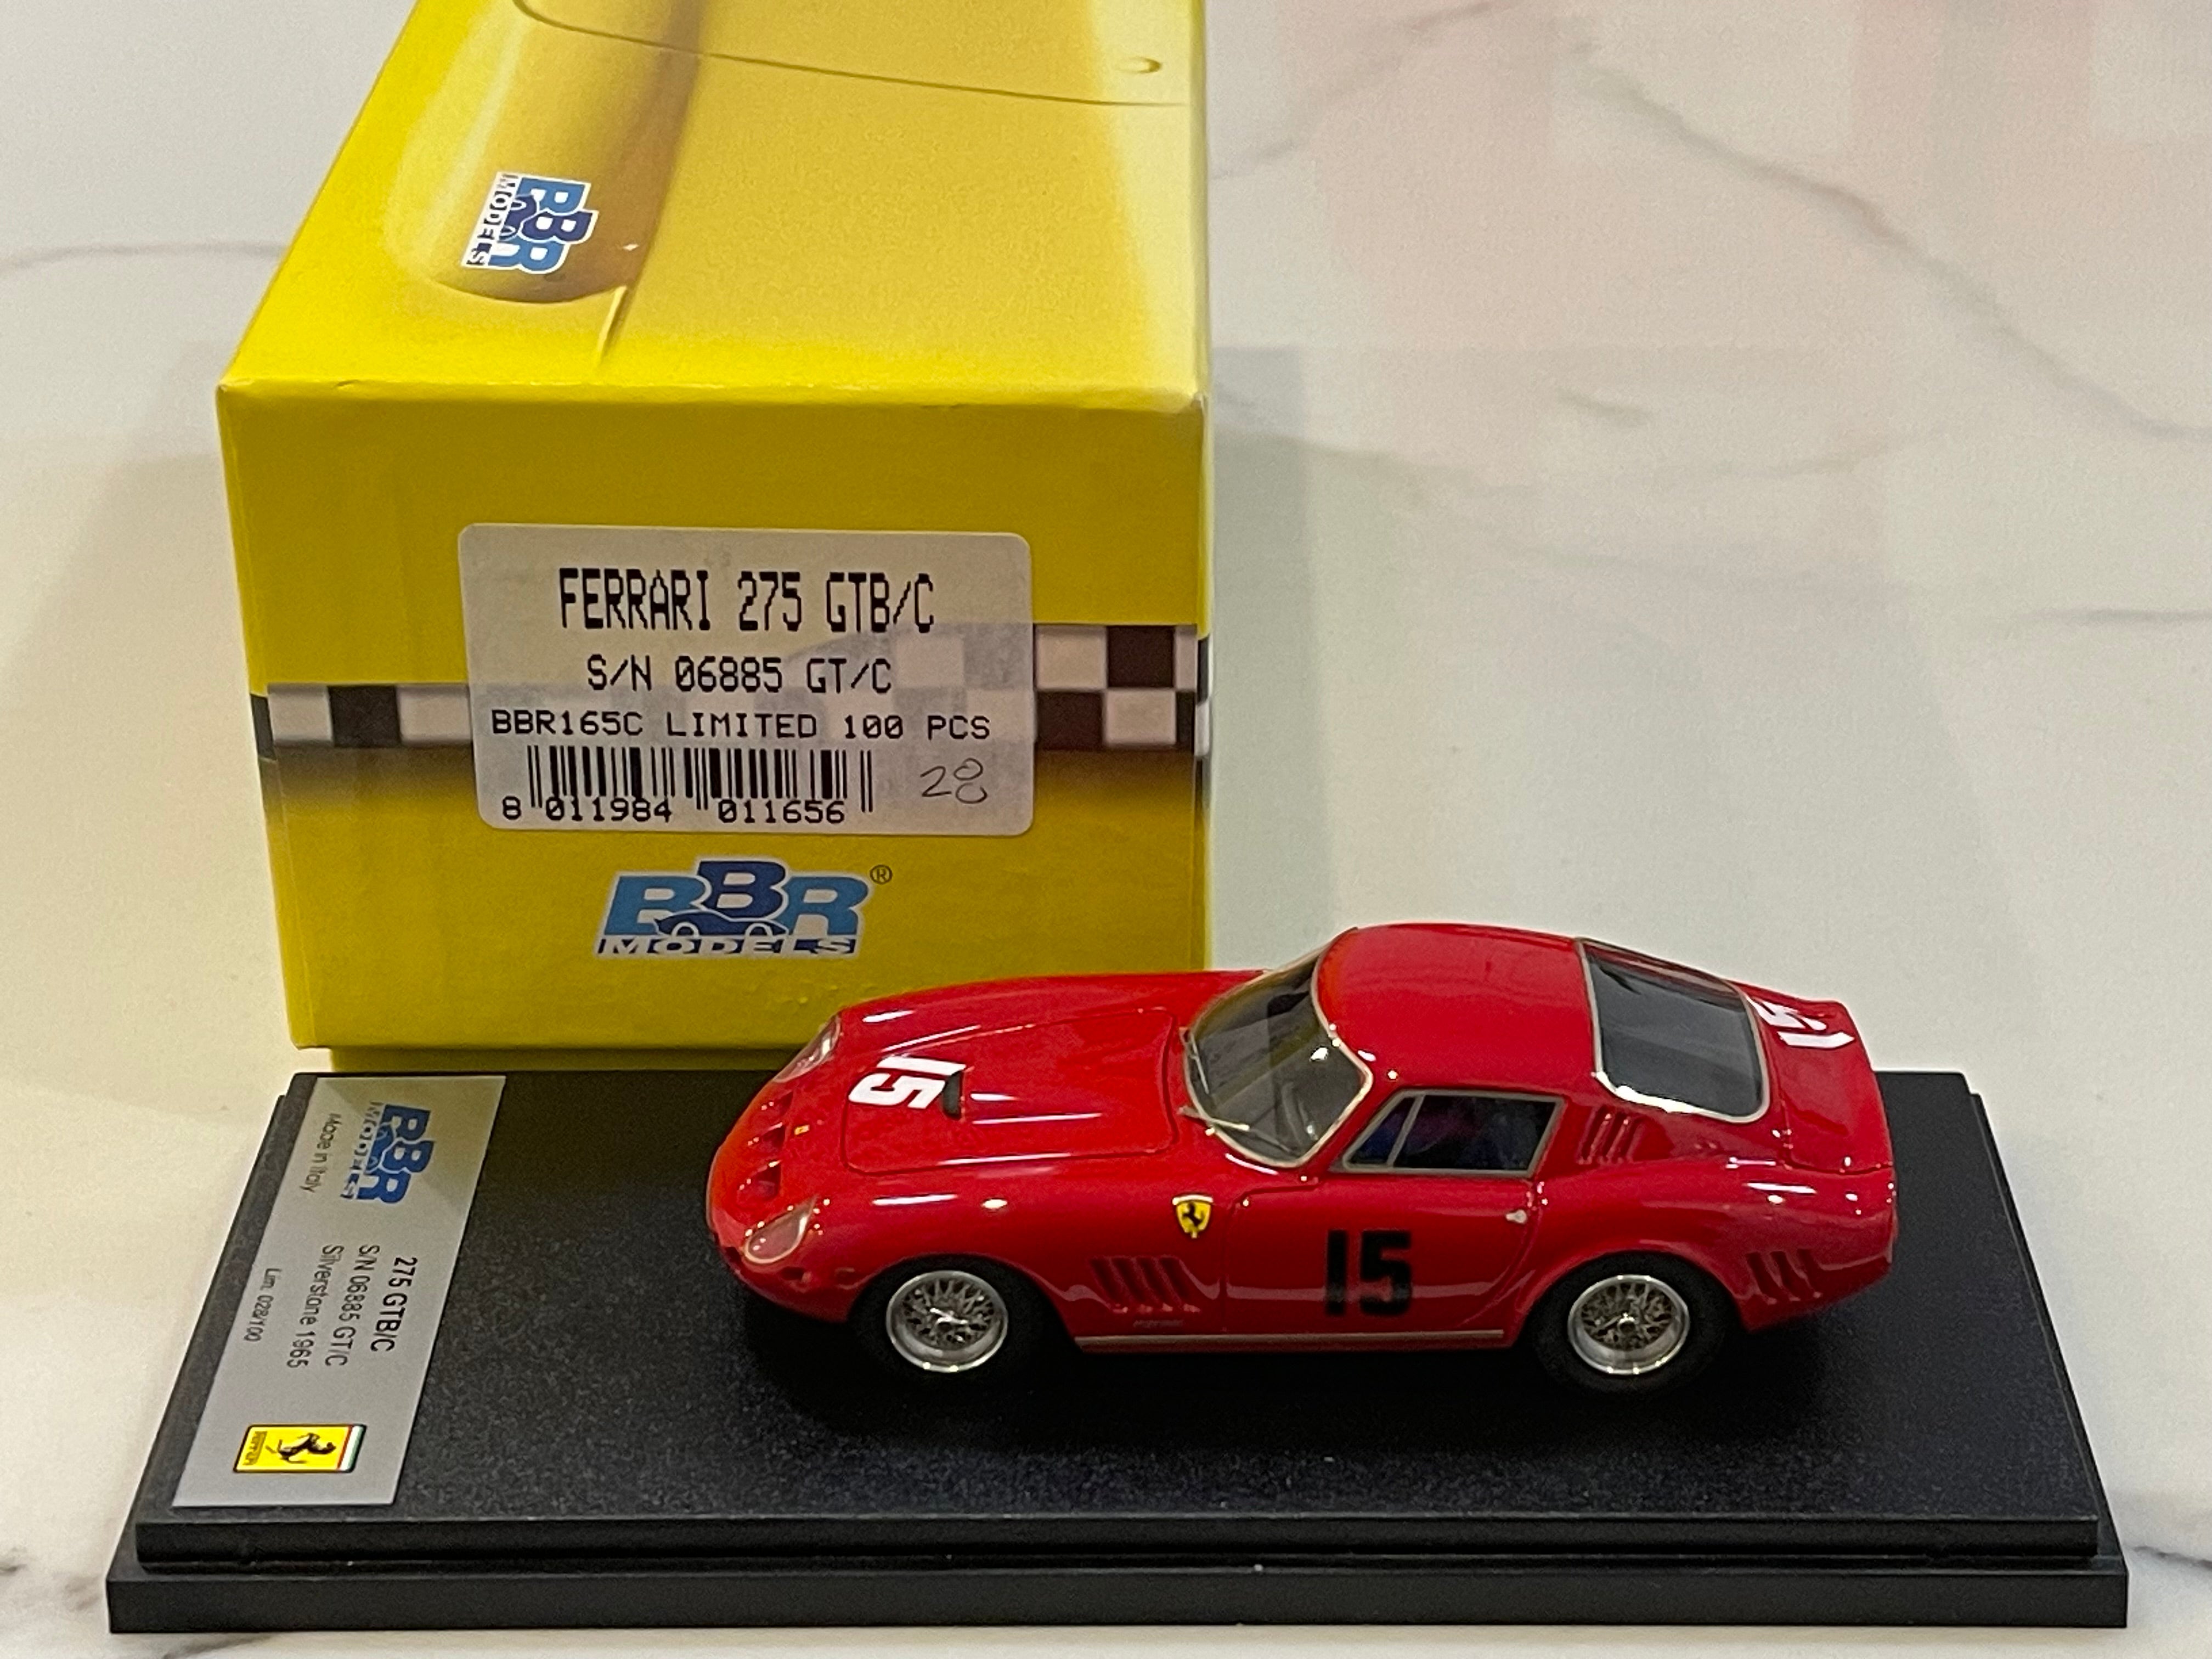 BBR 1/43 Ferrari 275 GTB/C 06885GT/C Silverstone 1965 Red No. 15 